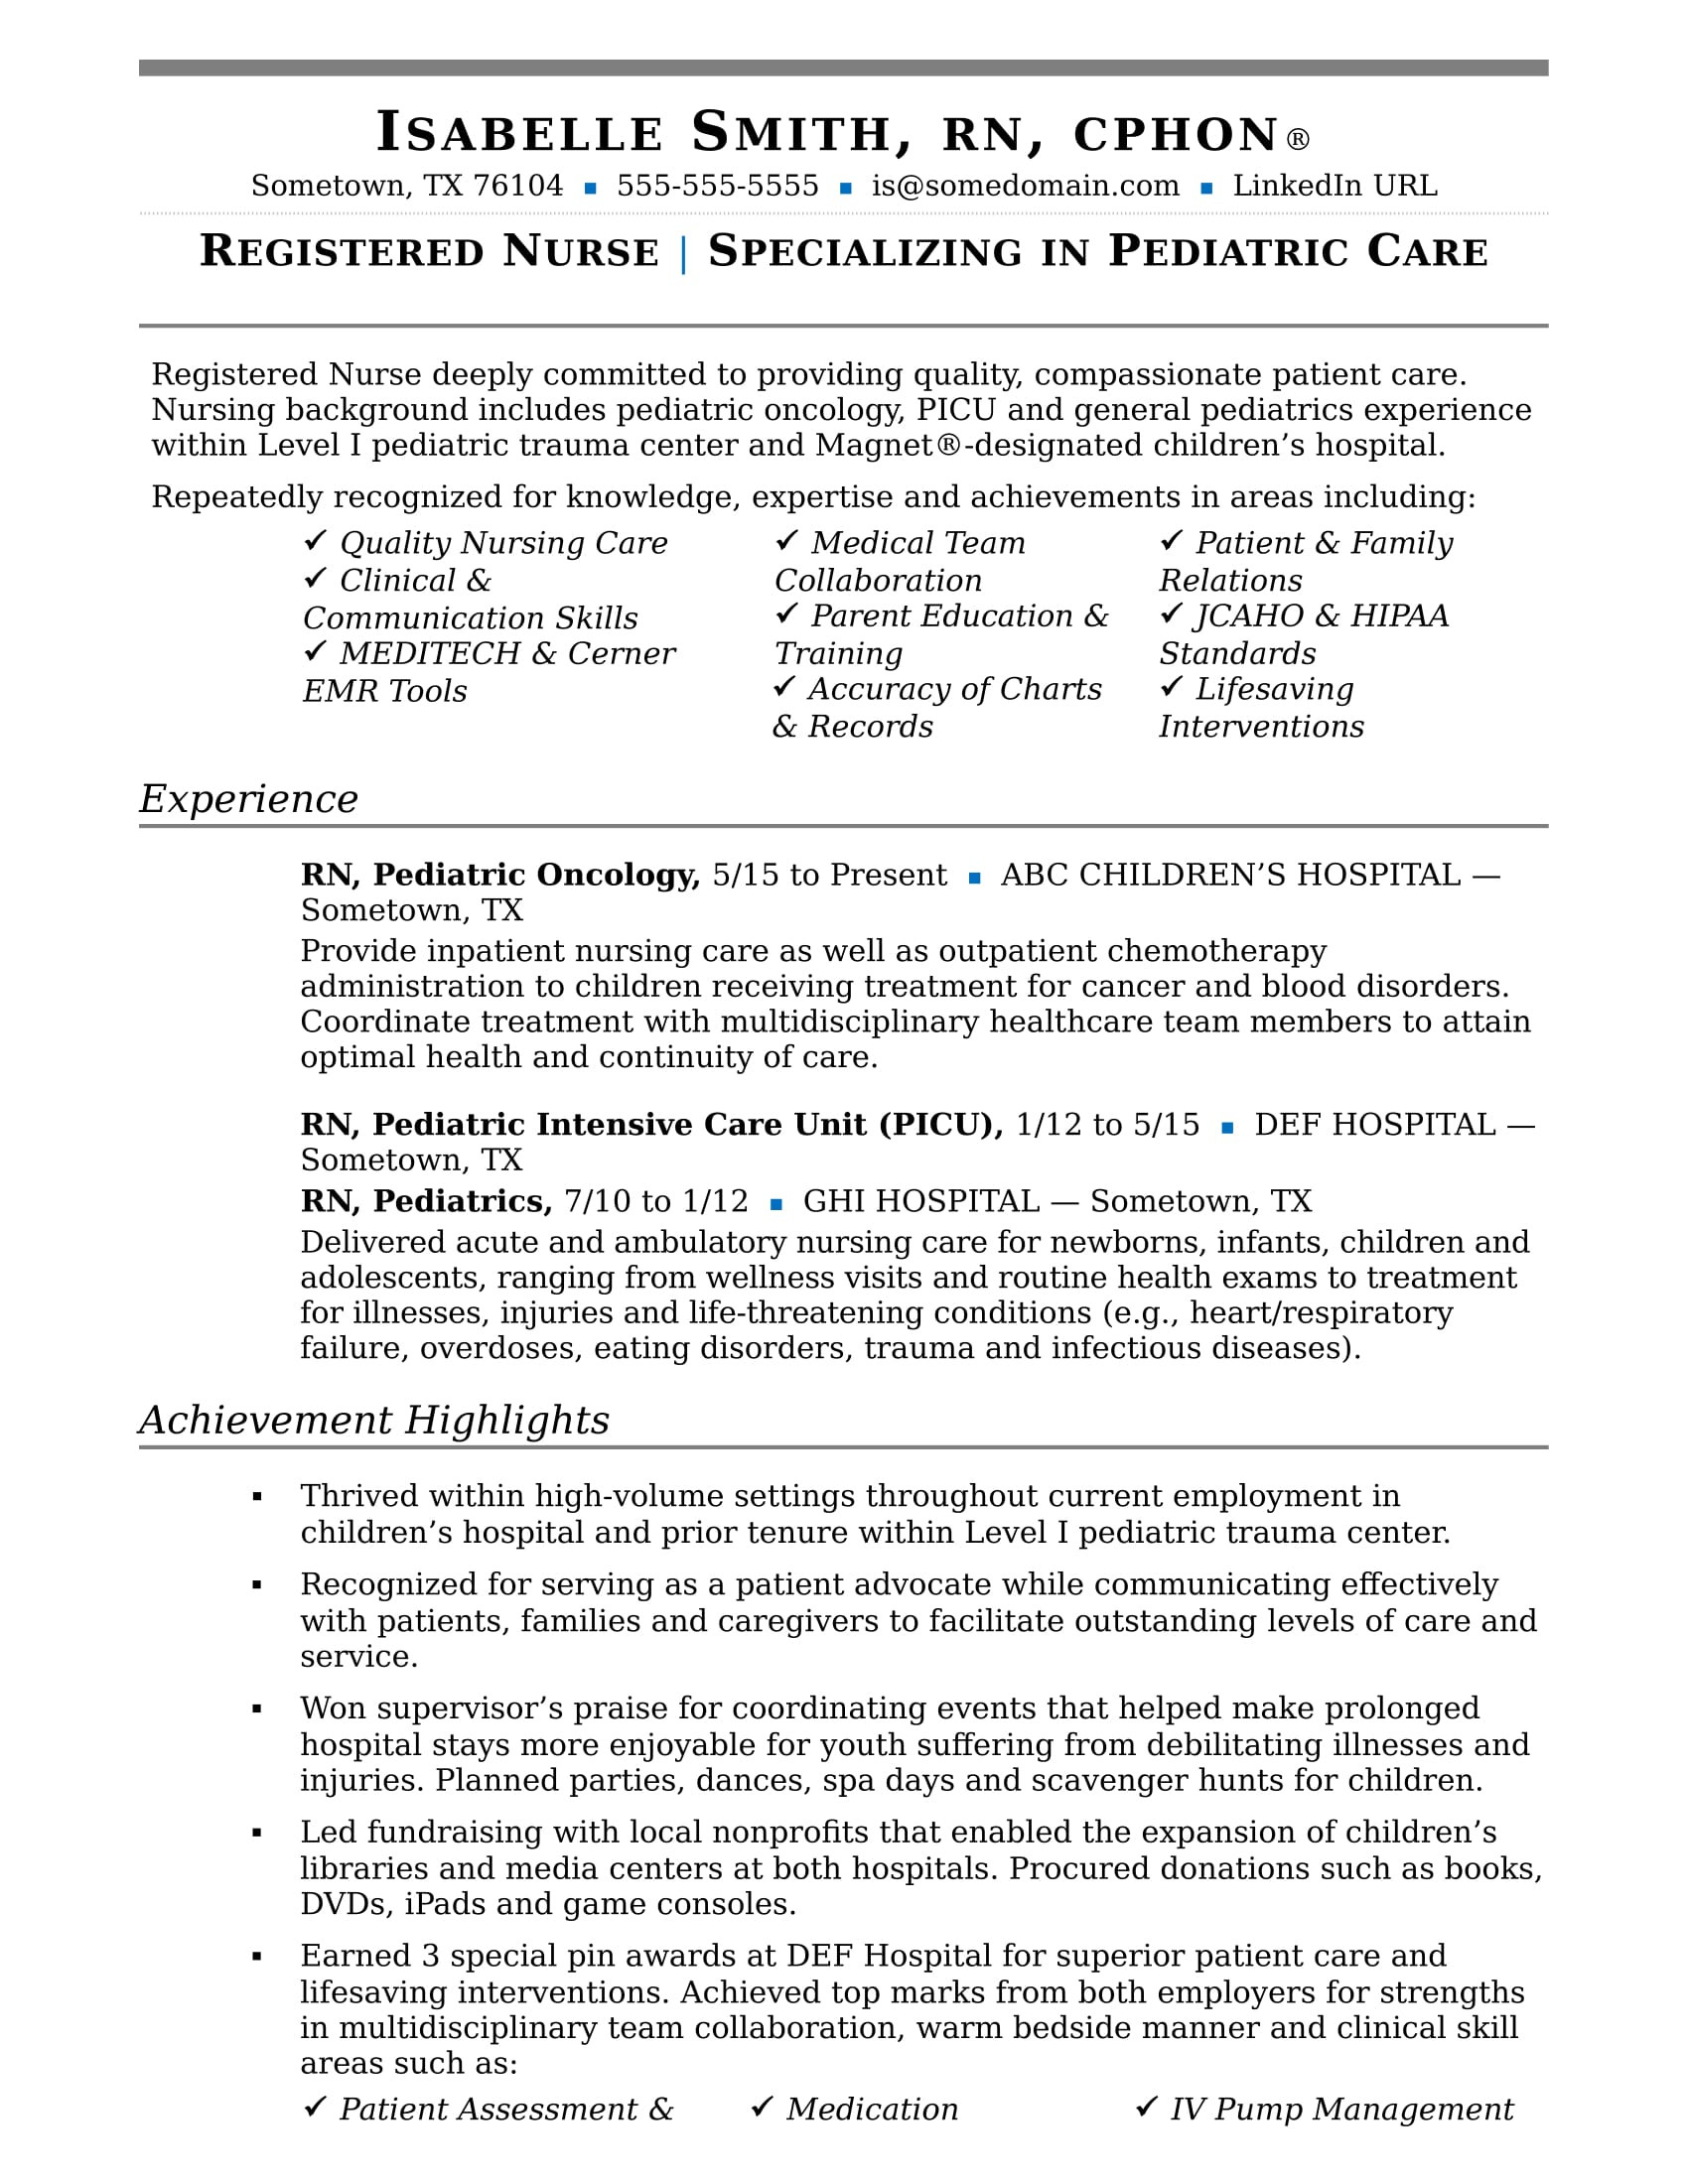 Sample Of Resume Of Registered Nurse Nurse Resume Sample Monster.com